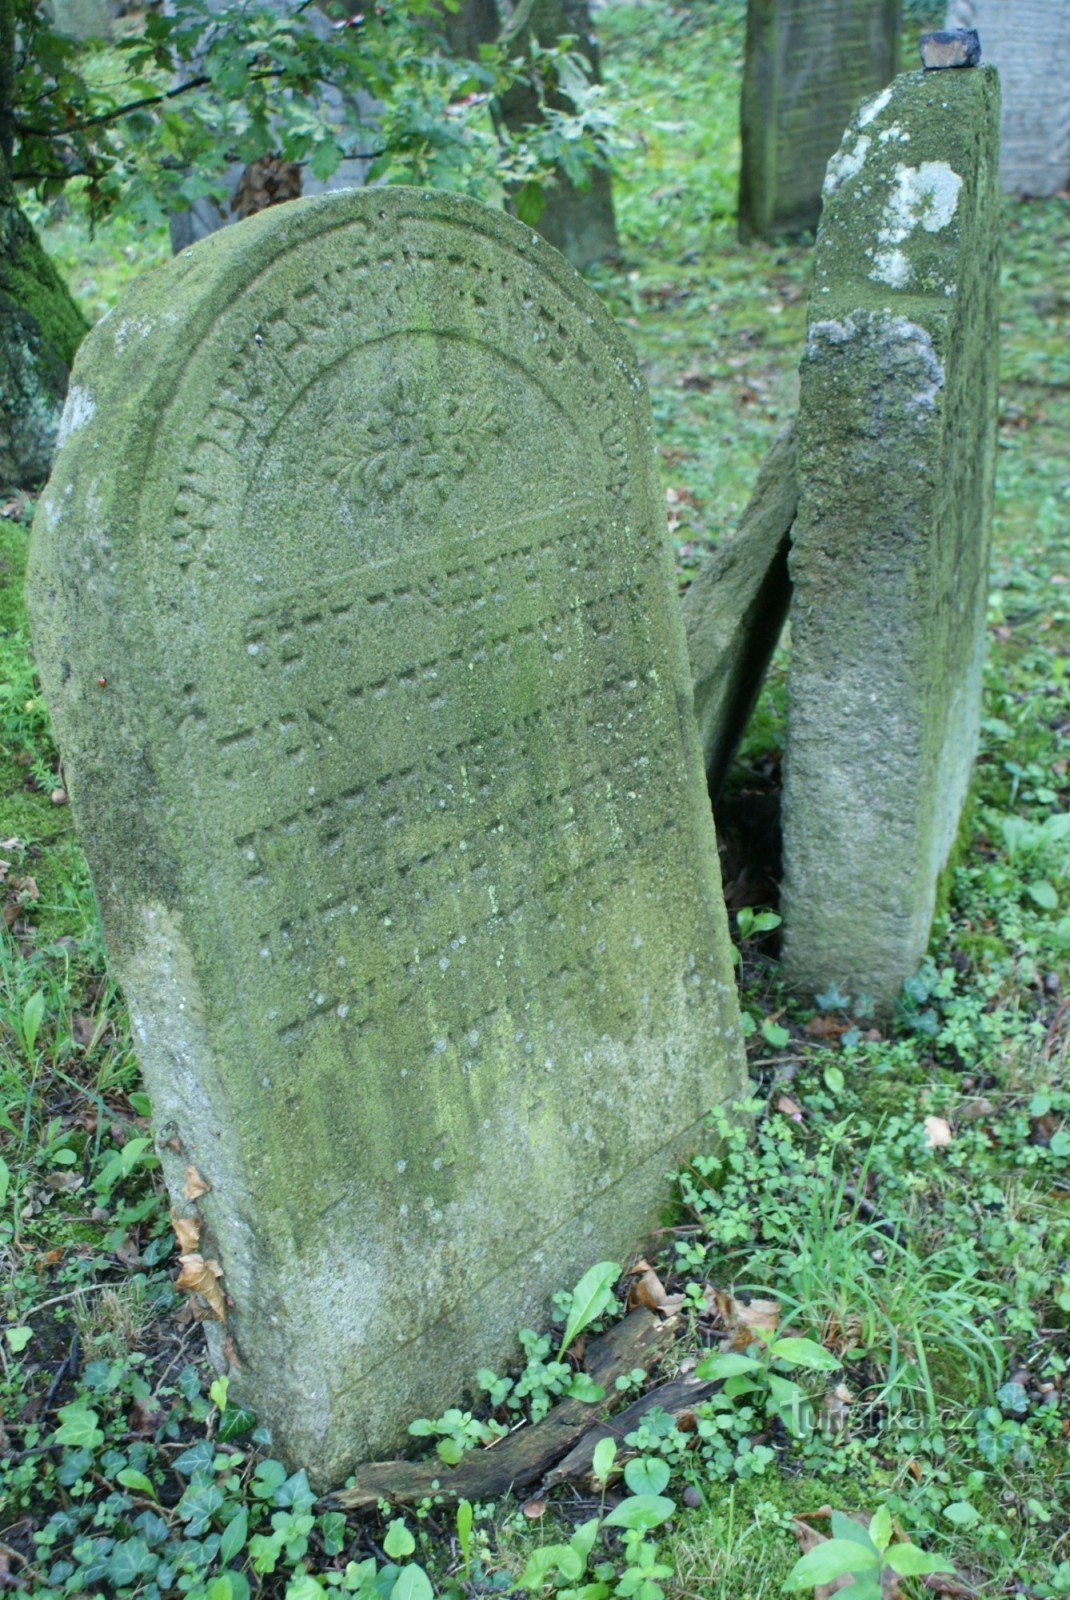 Hluboká nad Vltavou – Εβραϊκό νεκροταφείο